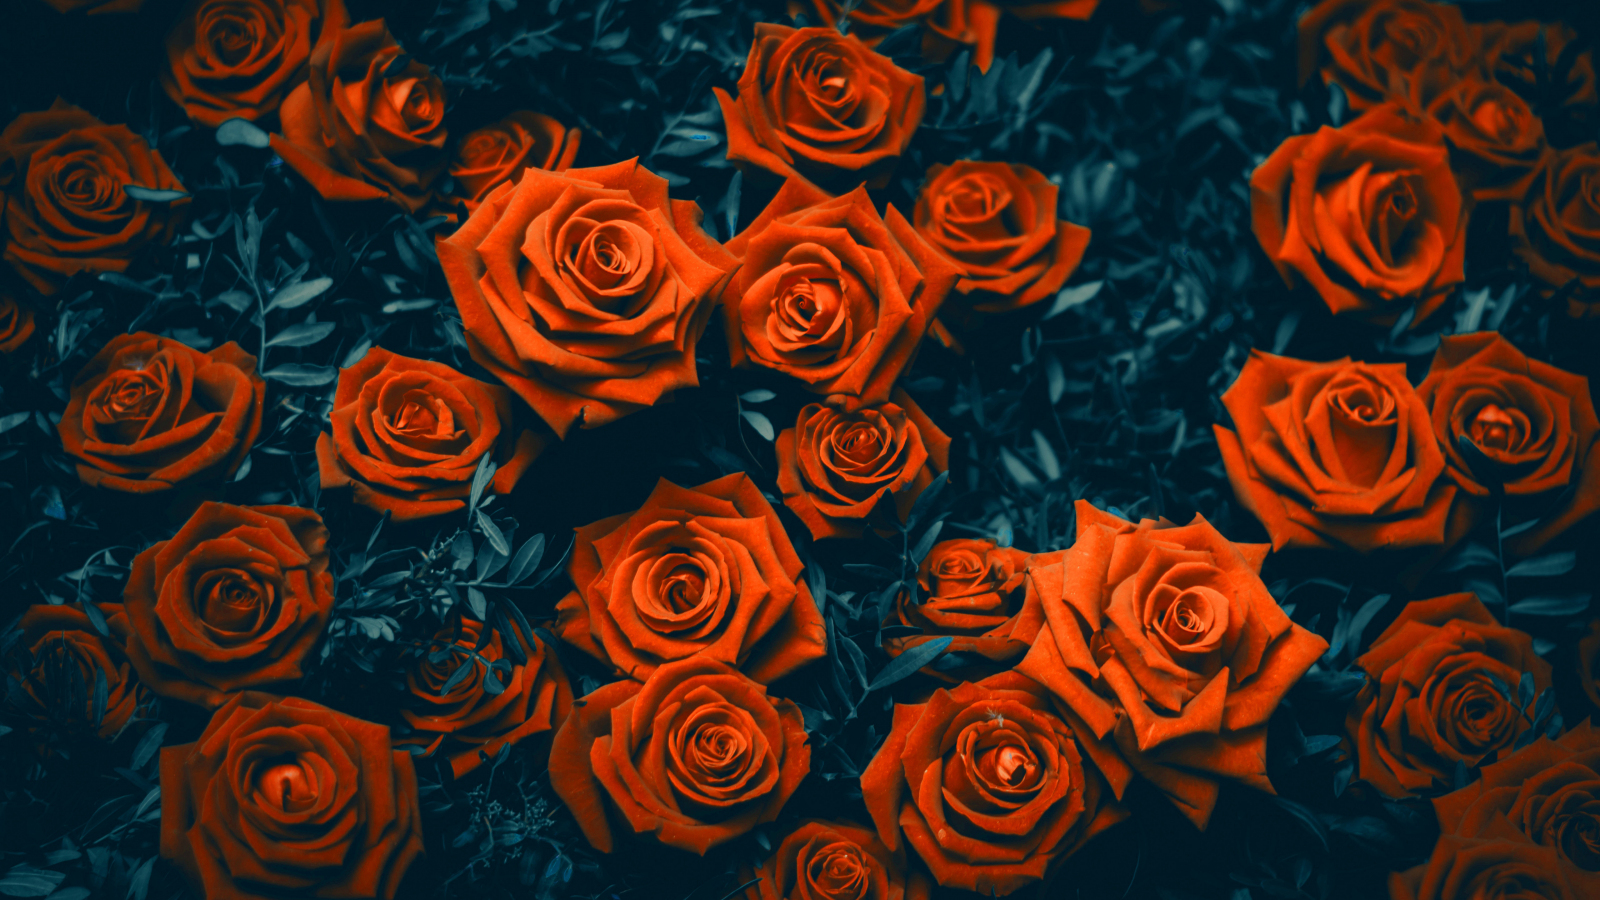 Download wallpaper 1600x900 garden roses, flowers, 16:9 widescreen 1600x900  hd background, 24278